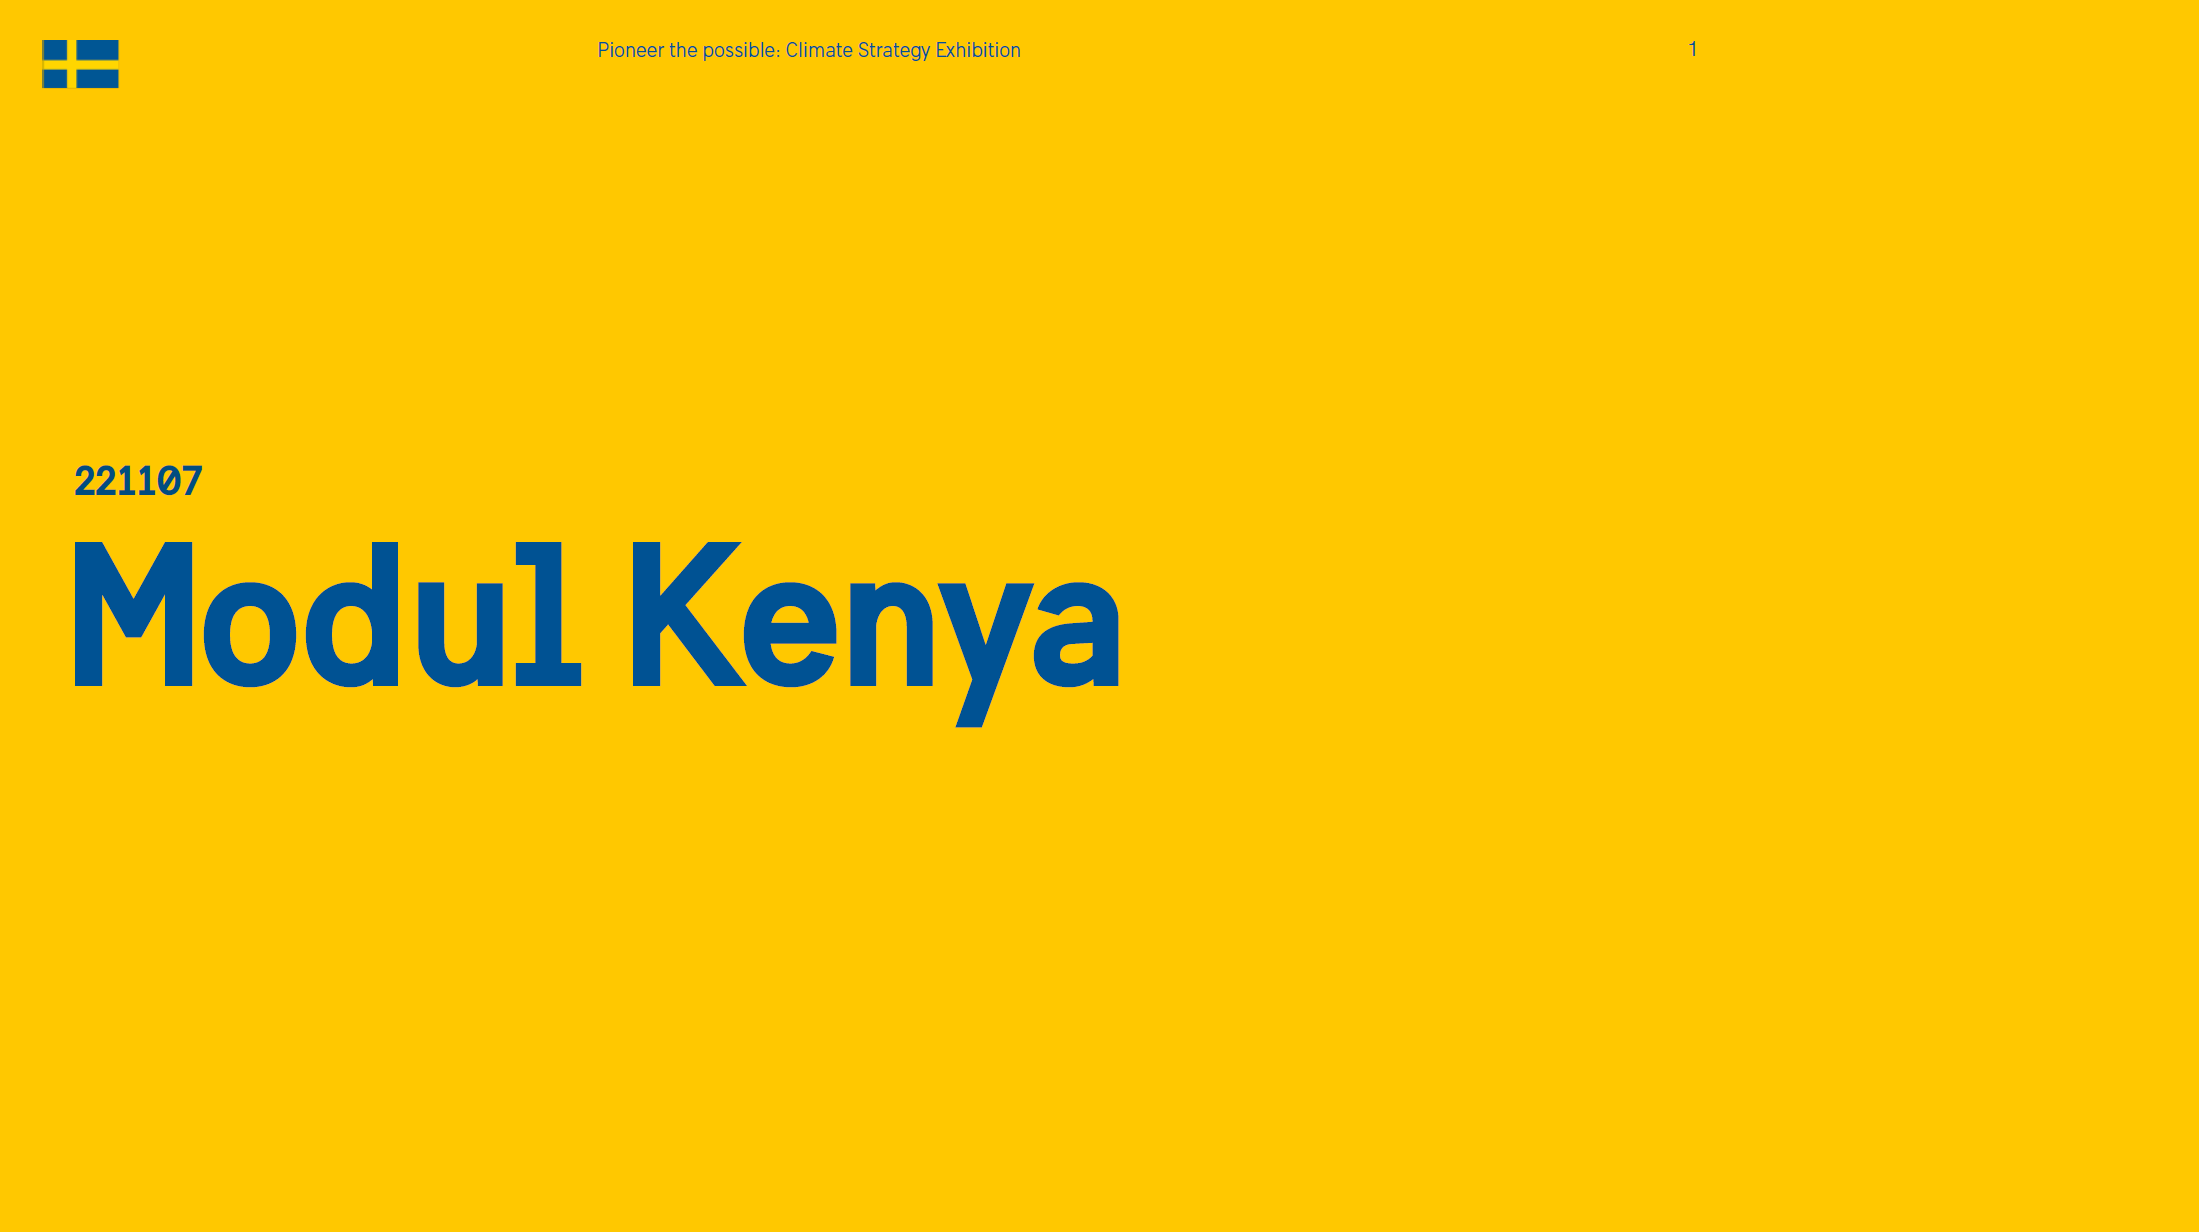 Module Kenya